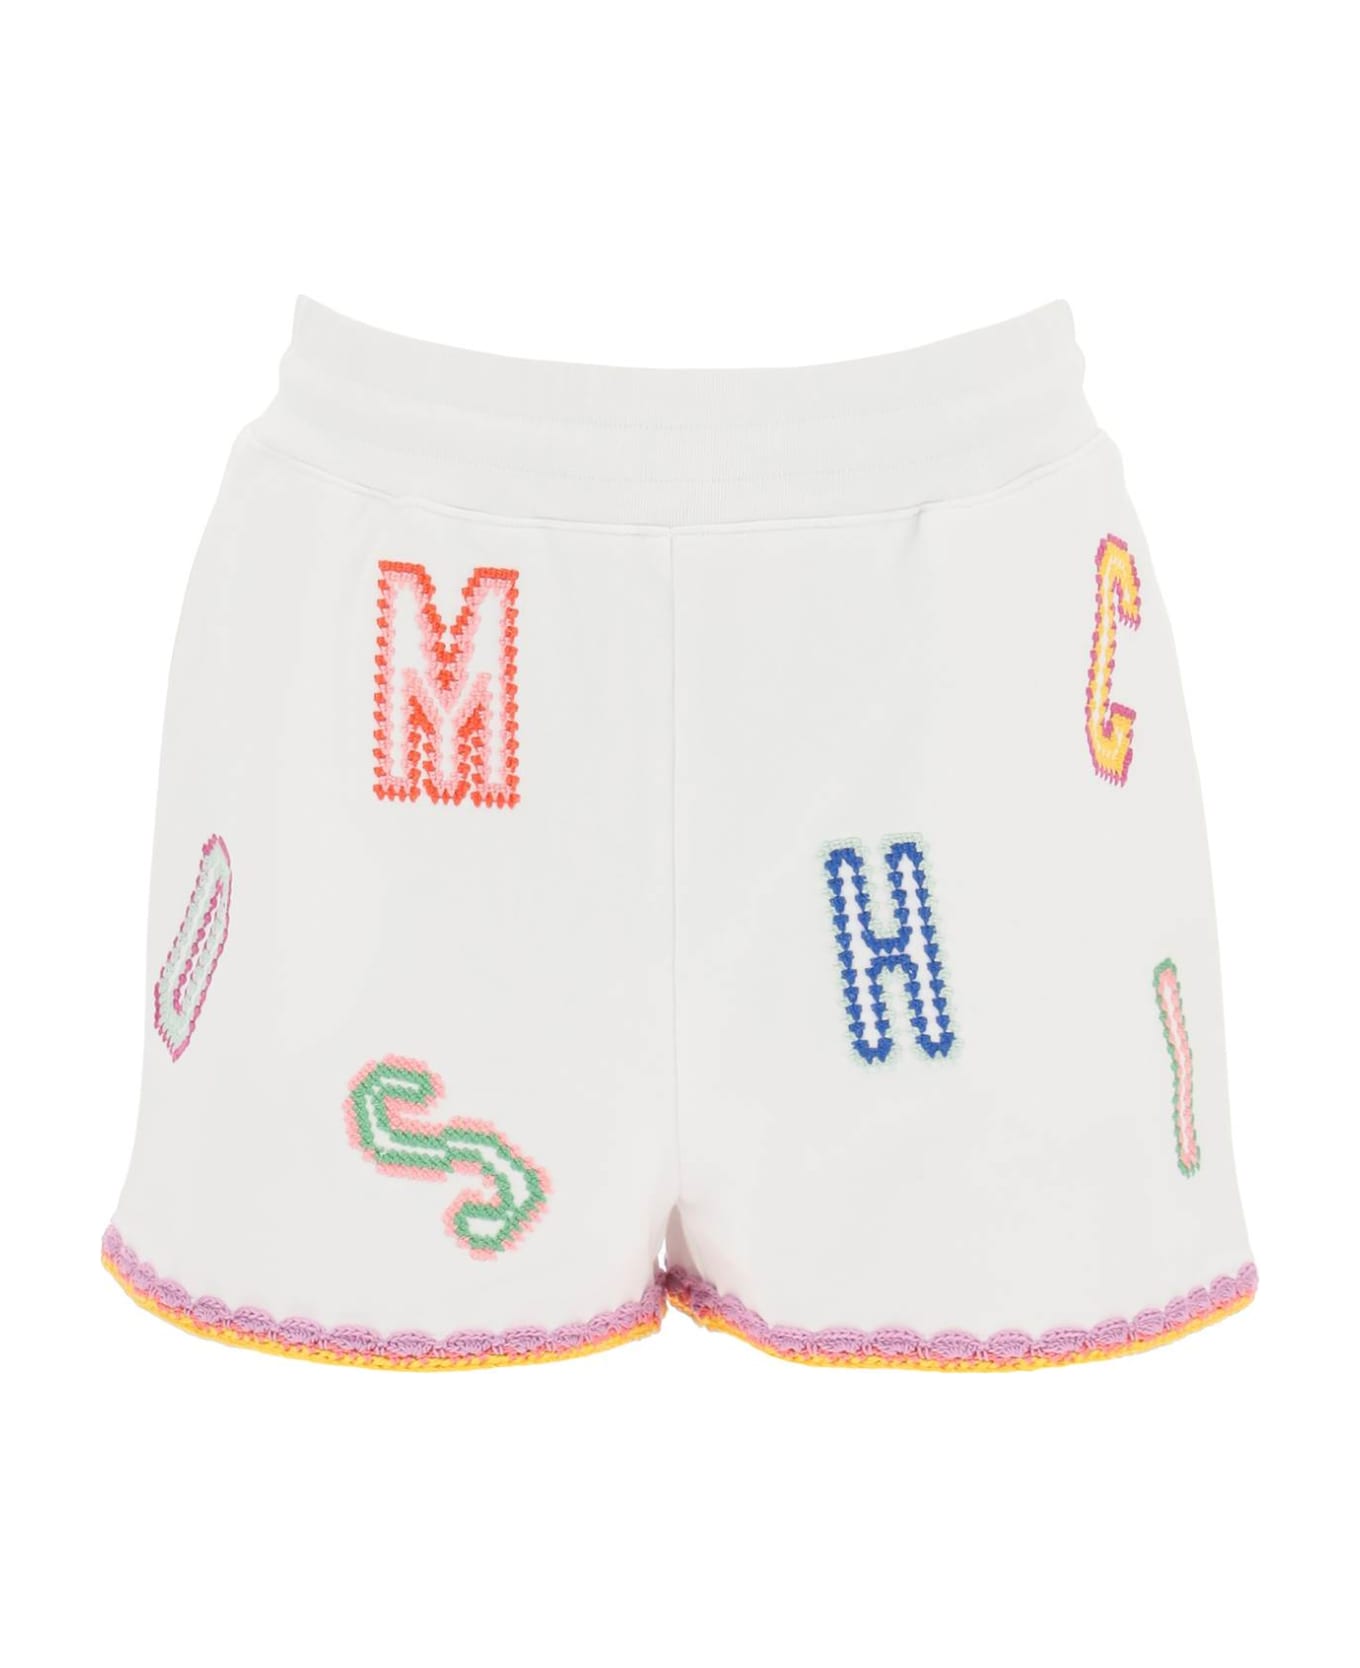 Moschino Embroidered Cotton Shorts - FANTASIA BIANCO (White)